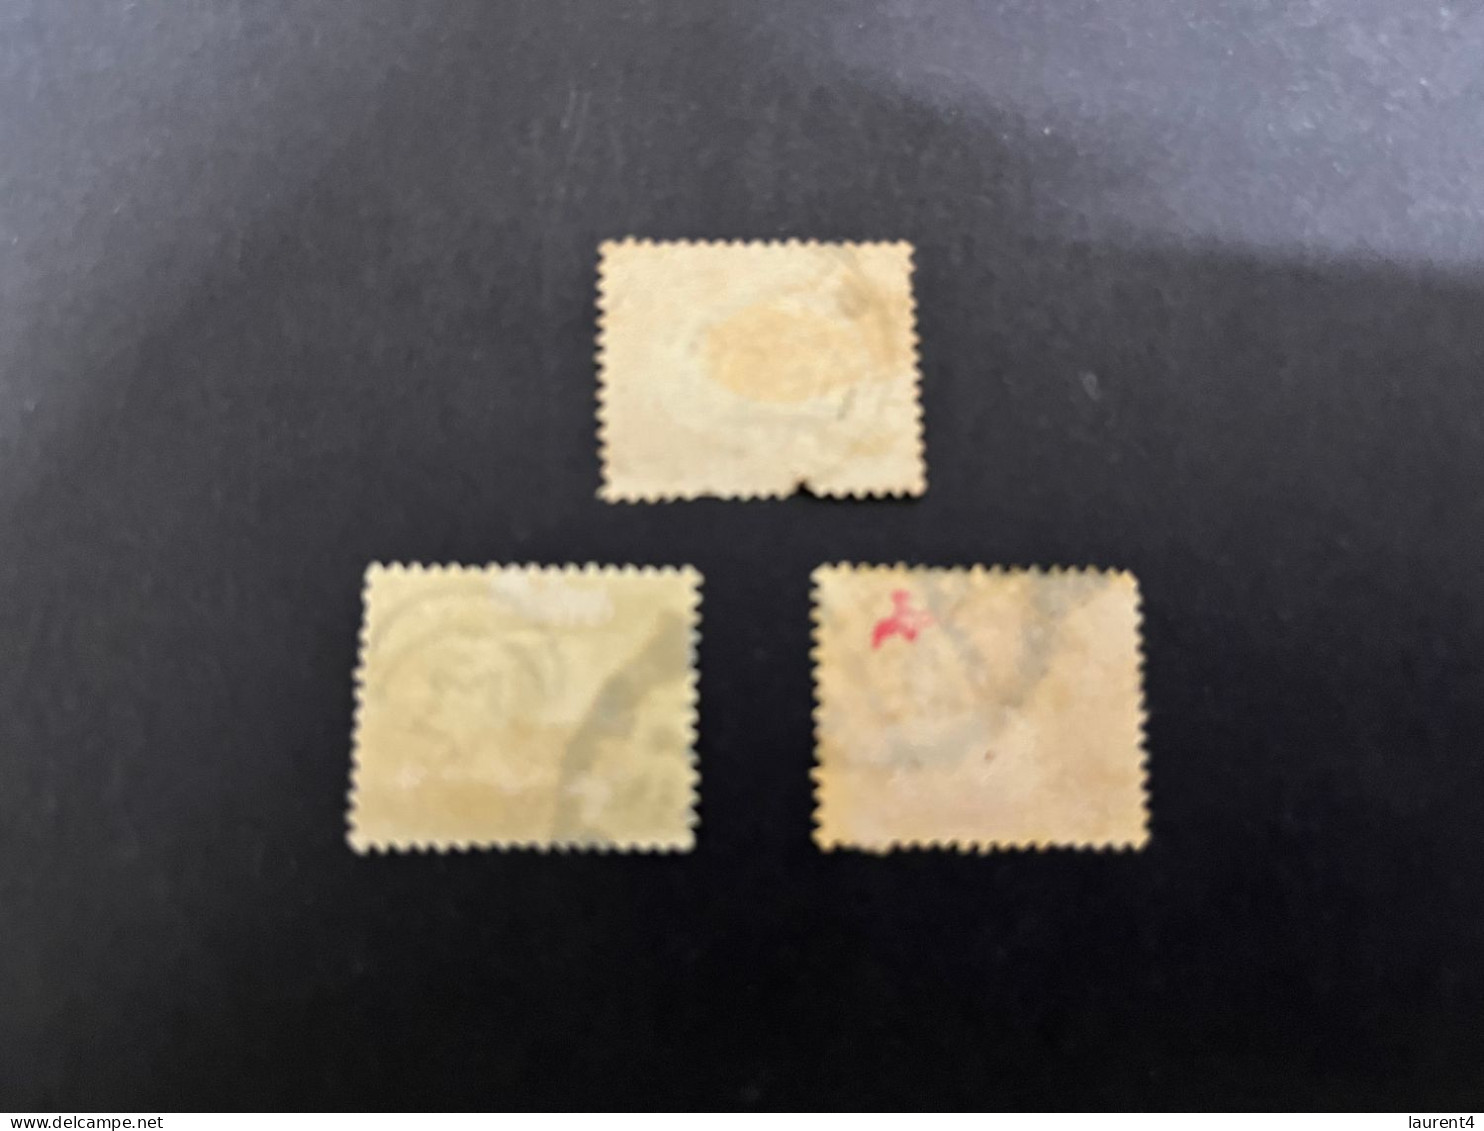 8-1-2024 (stamp) 3 Older Cancelled Stamp From Egypt (service Stamps) - Gebruikt